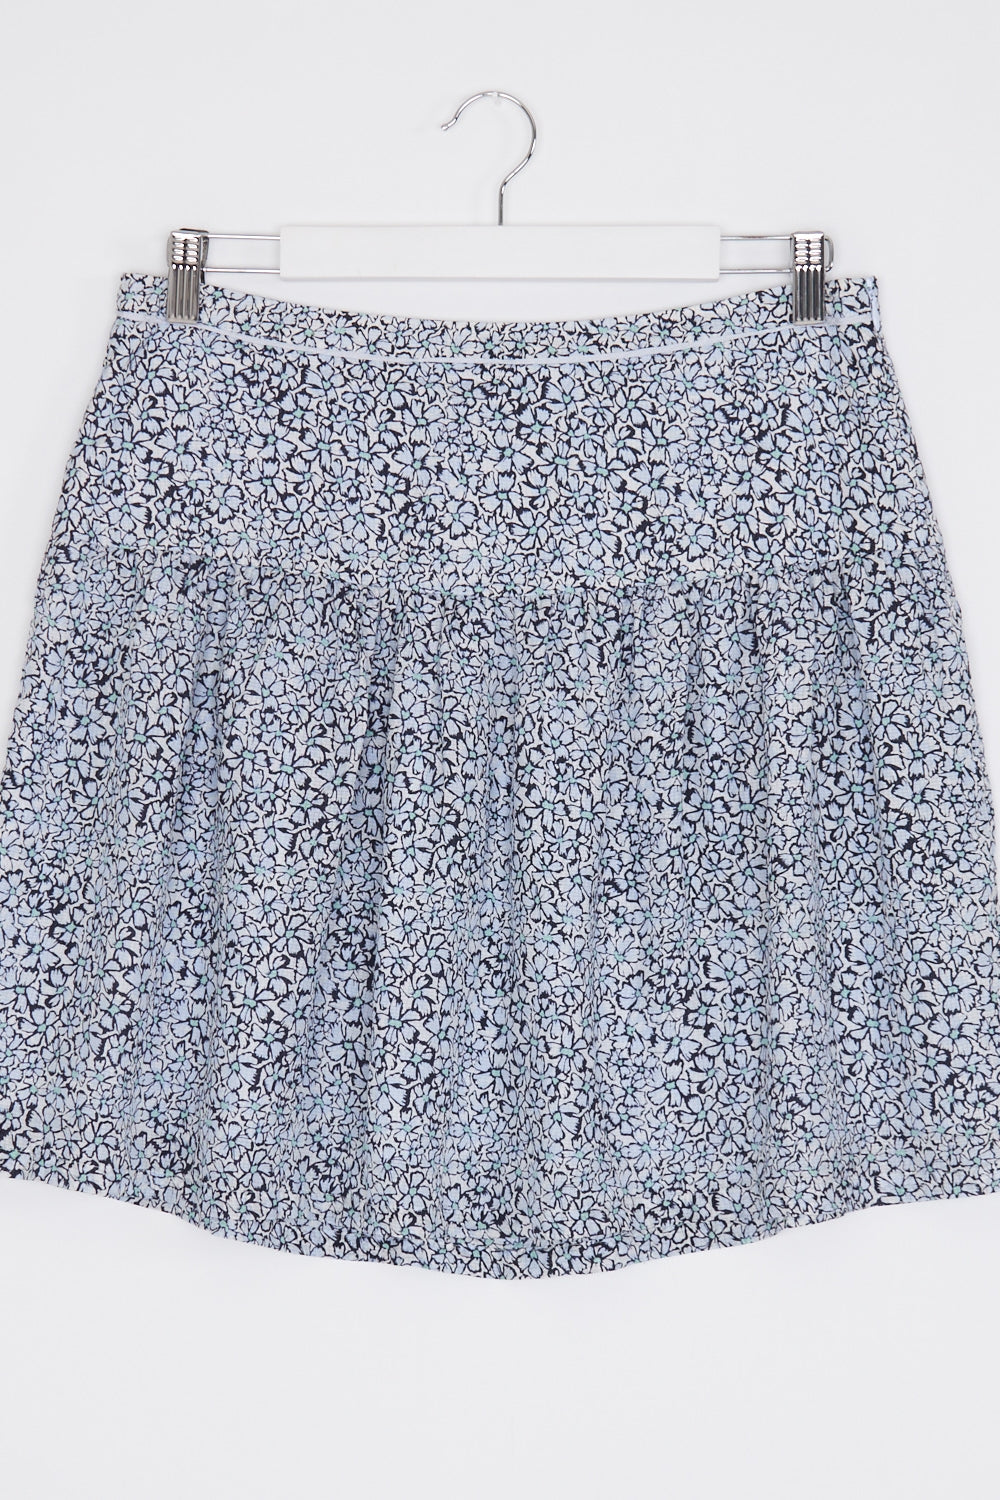 Kookai Blue Floral Silk Mini Skirt 14